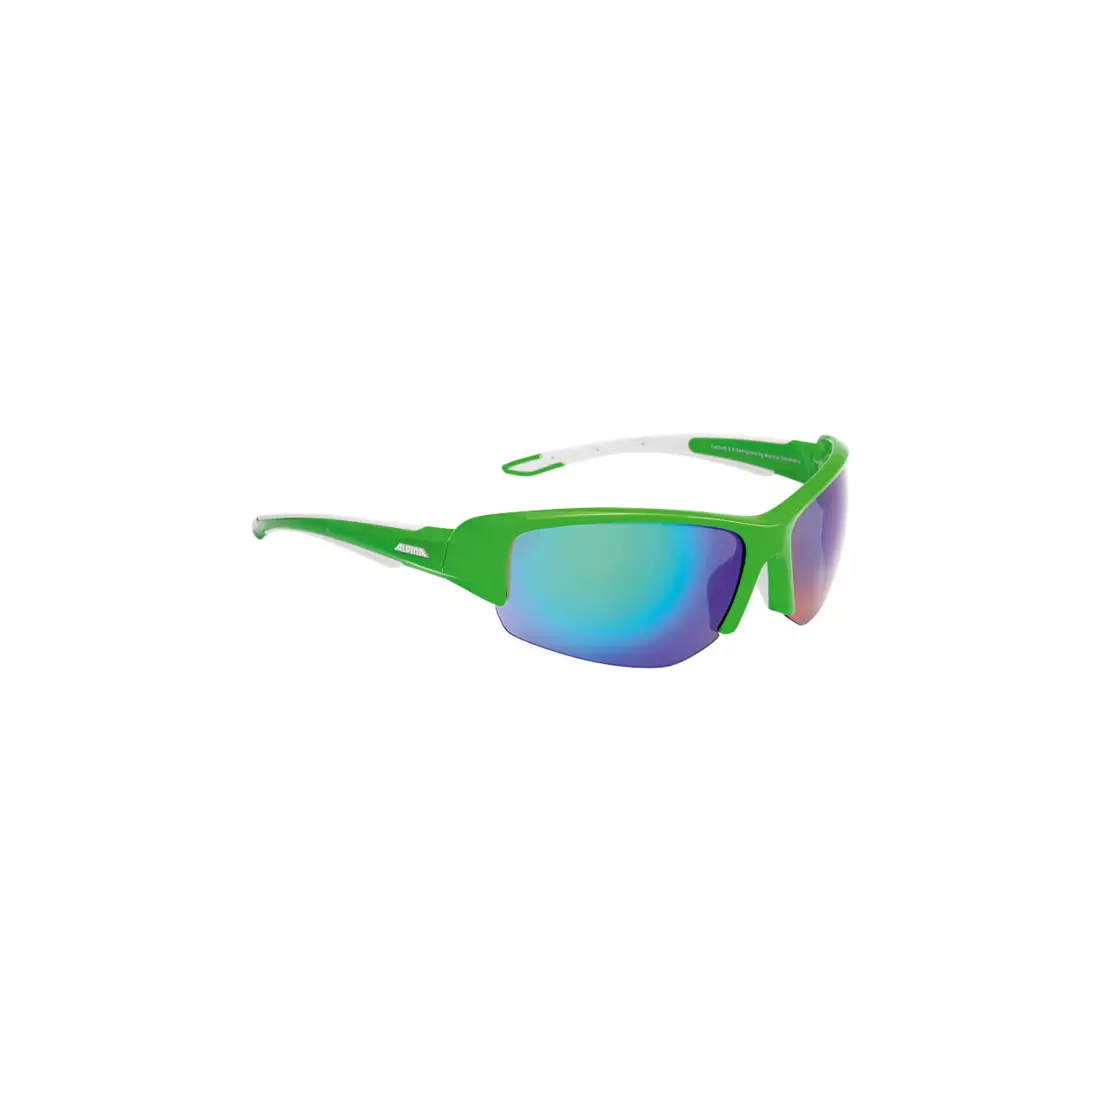 ALPINA - CALLUM 2.0 sports glasses - green-white / ceramic mirror glass green.